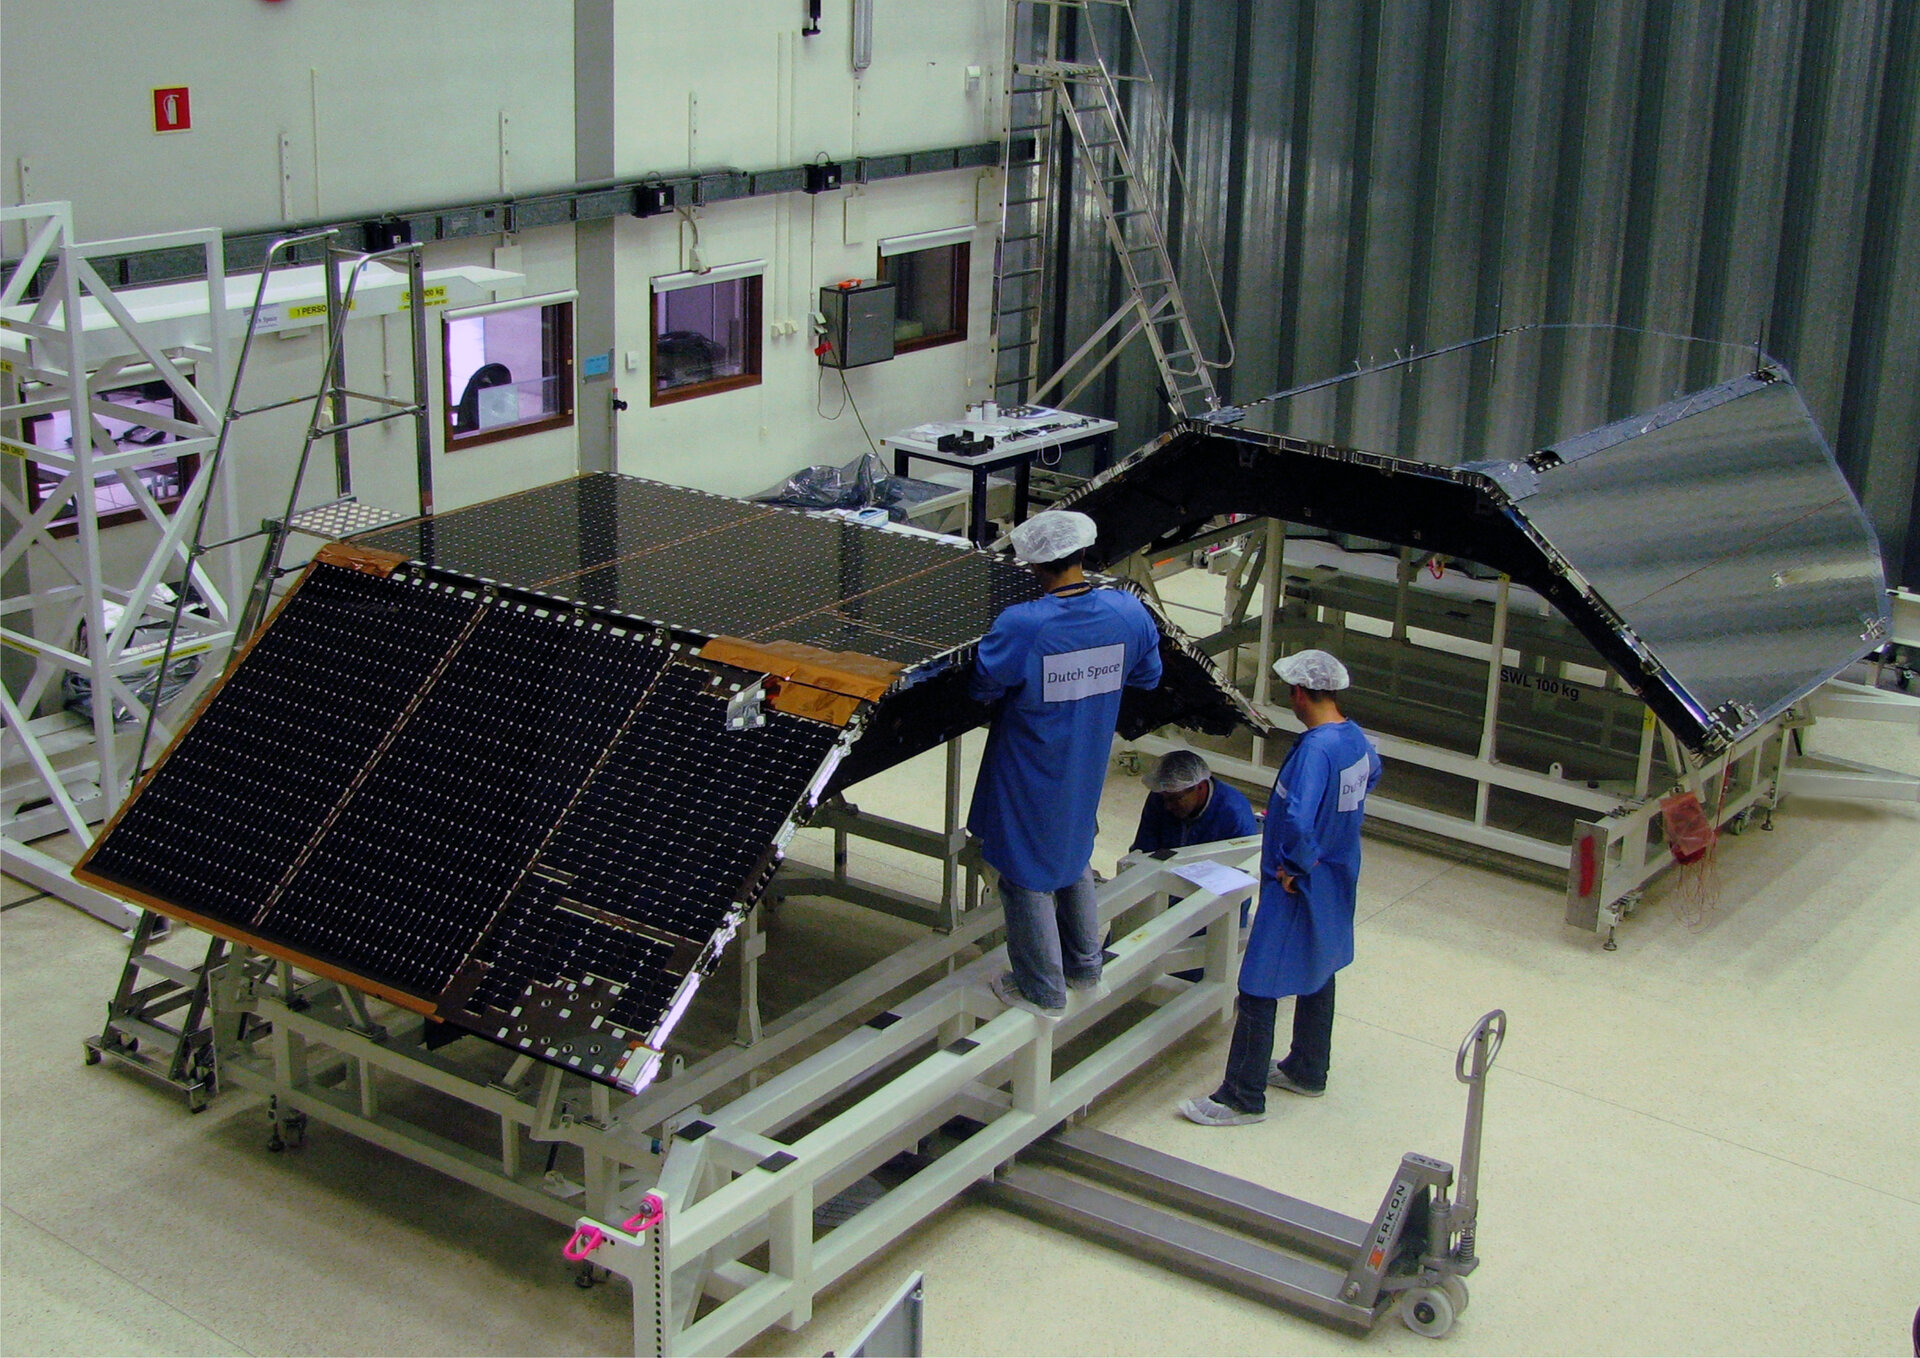 Herschel's combined Solar array and sunshade